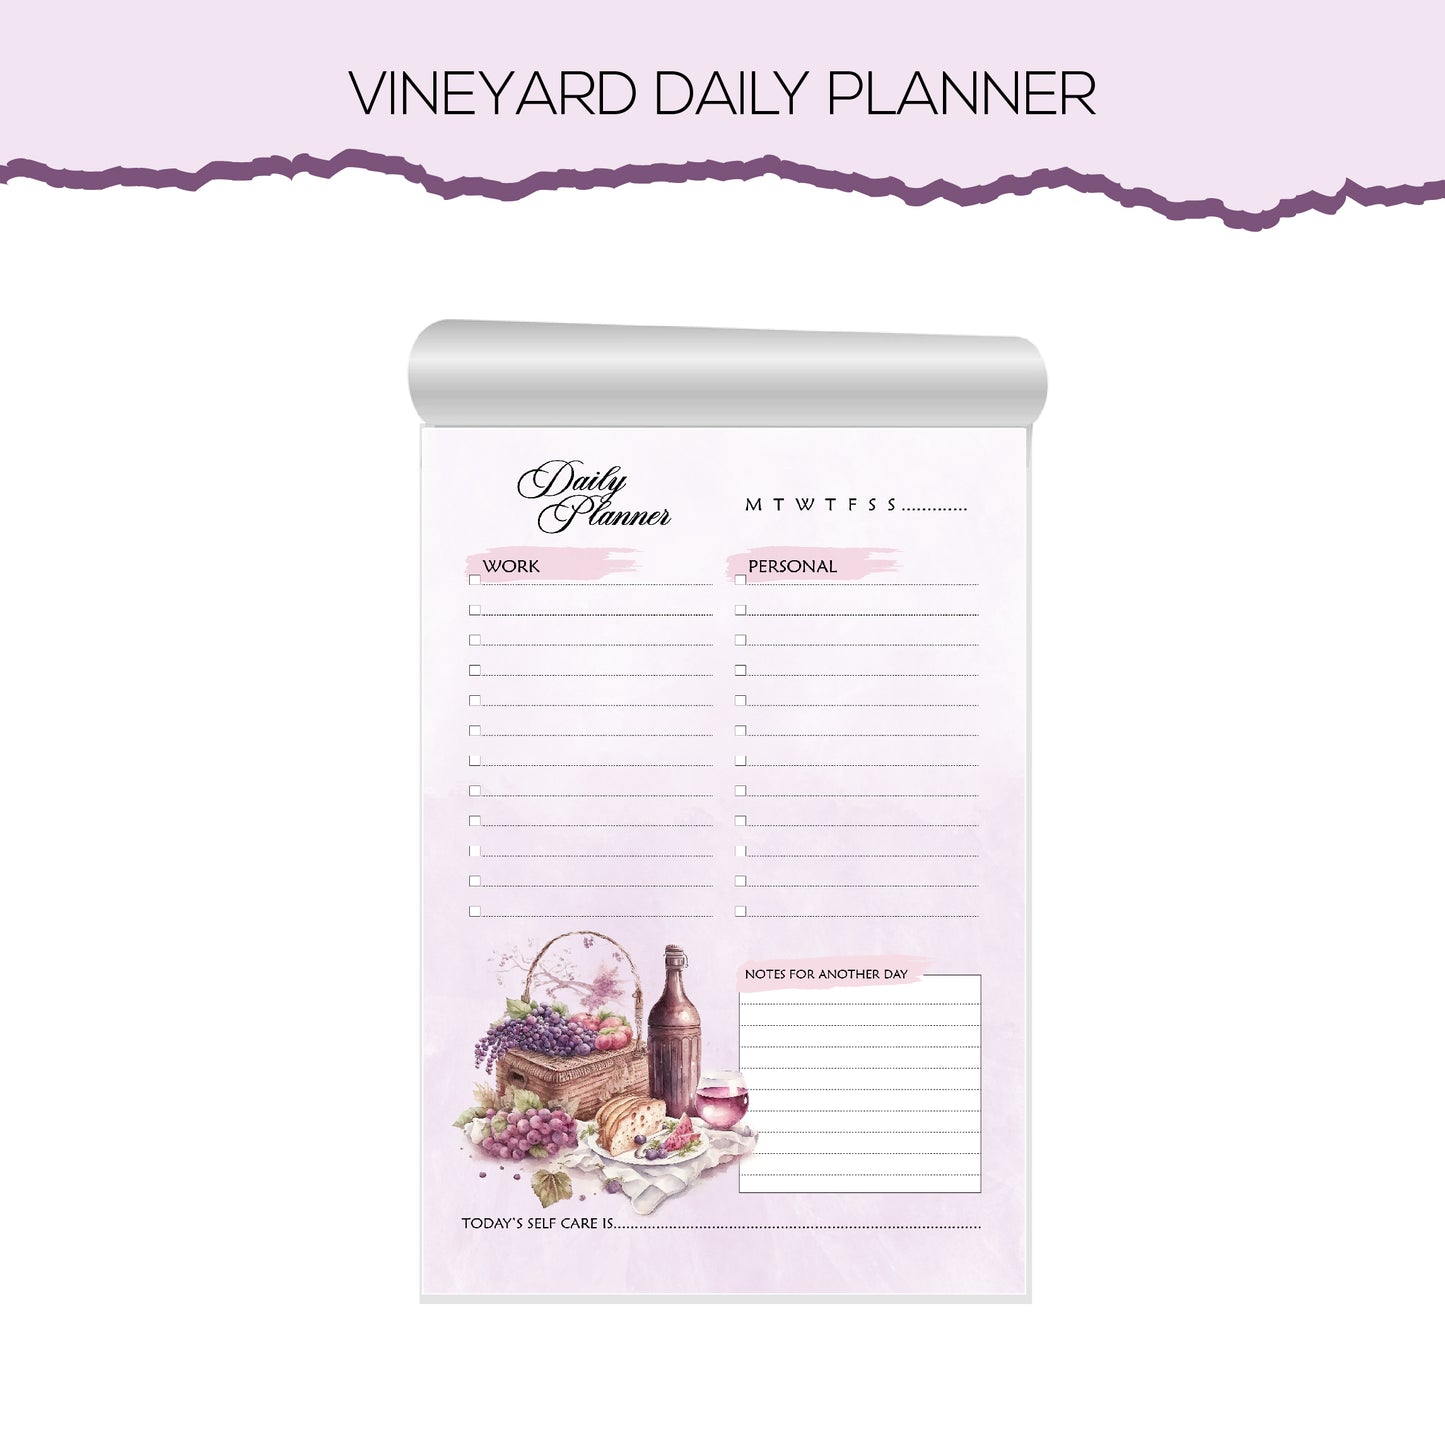 Vineyard Daily planner